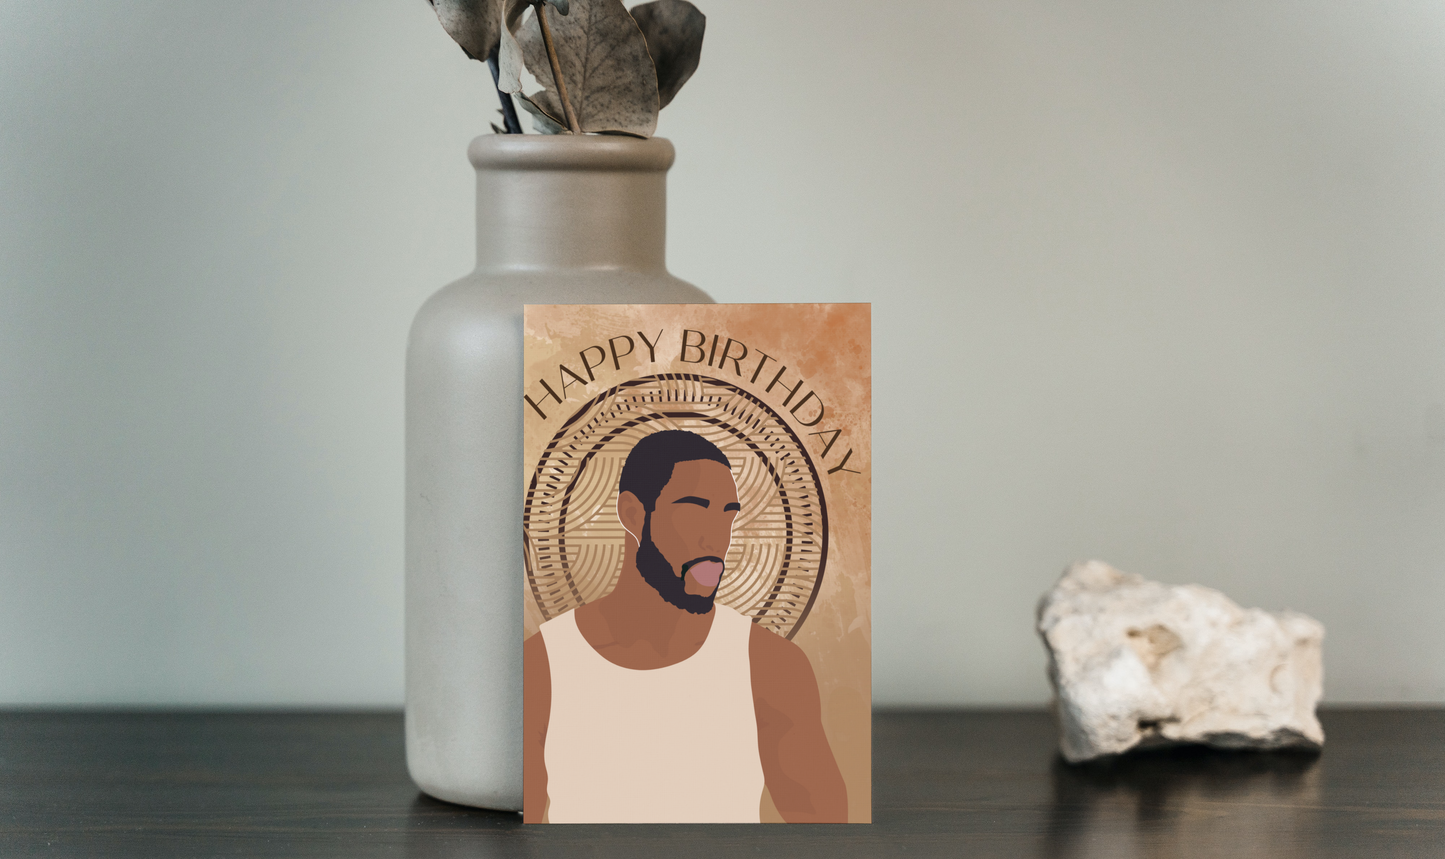 Neutral Brown Black Man Birthday Card